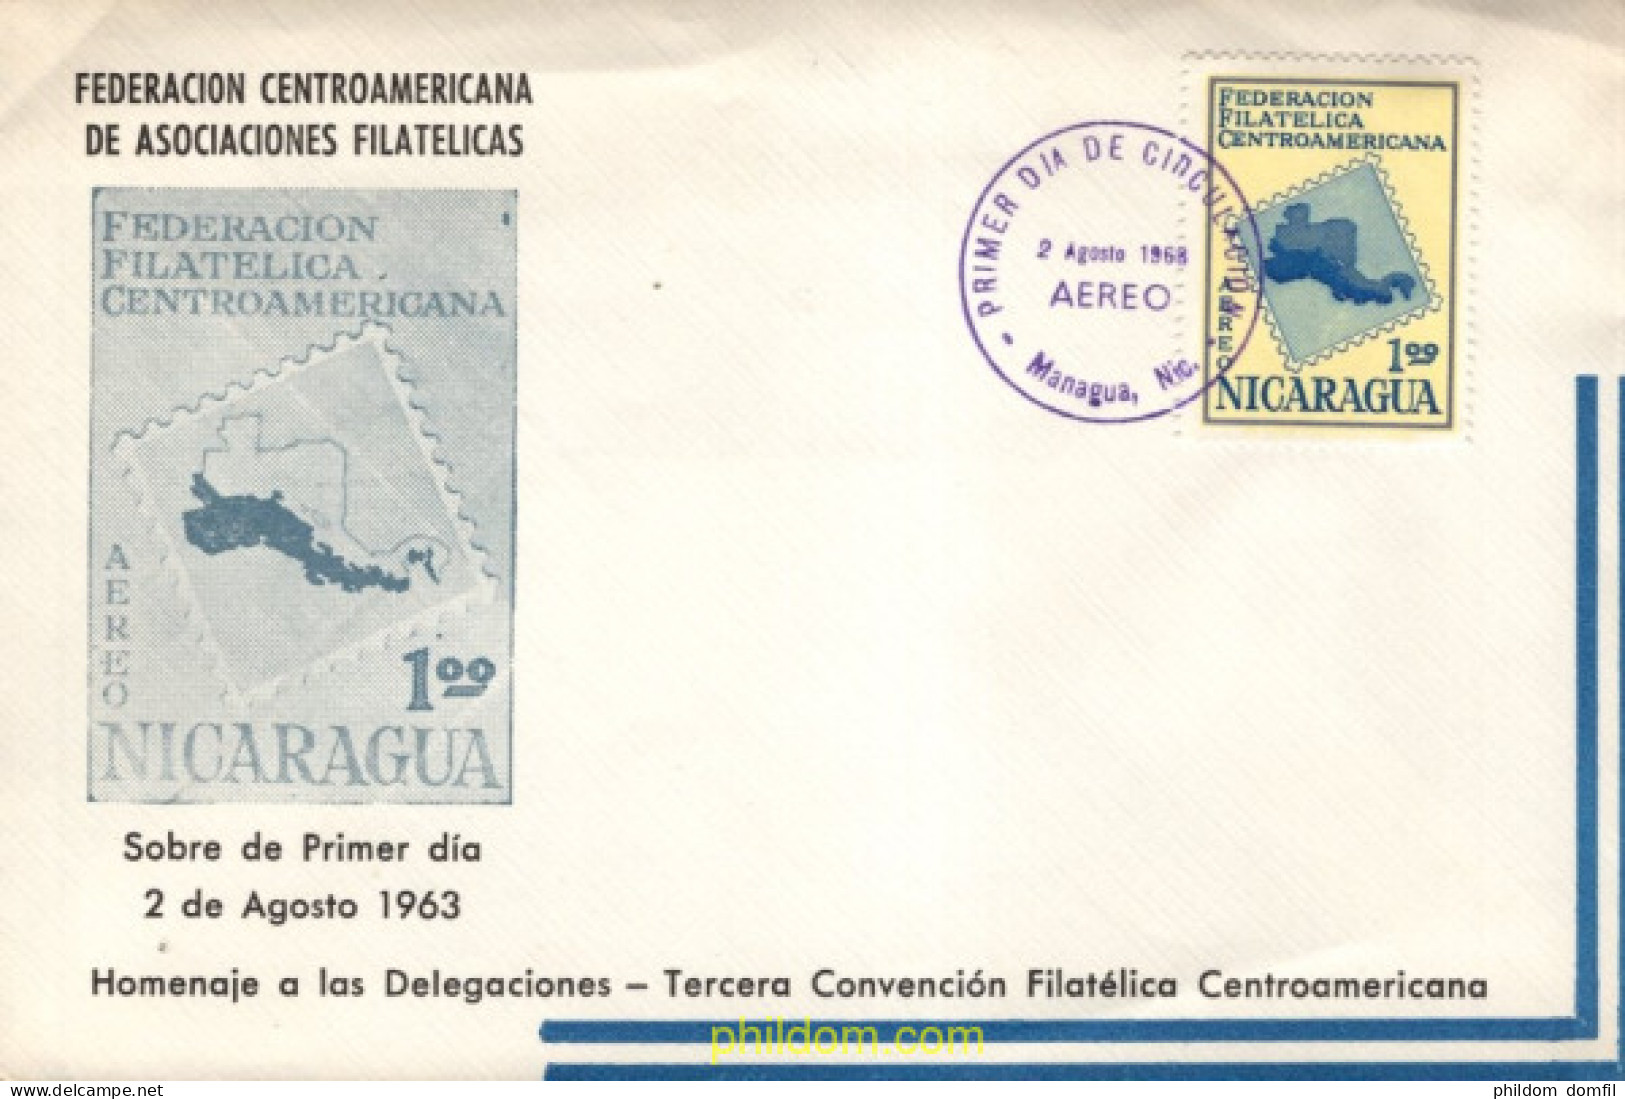 730940 MNH NICARAGUA 1963 FEDERACION FILATELICA CENTROAMERICANA - Nicaragua